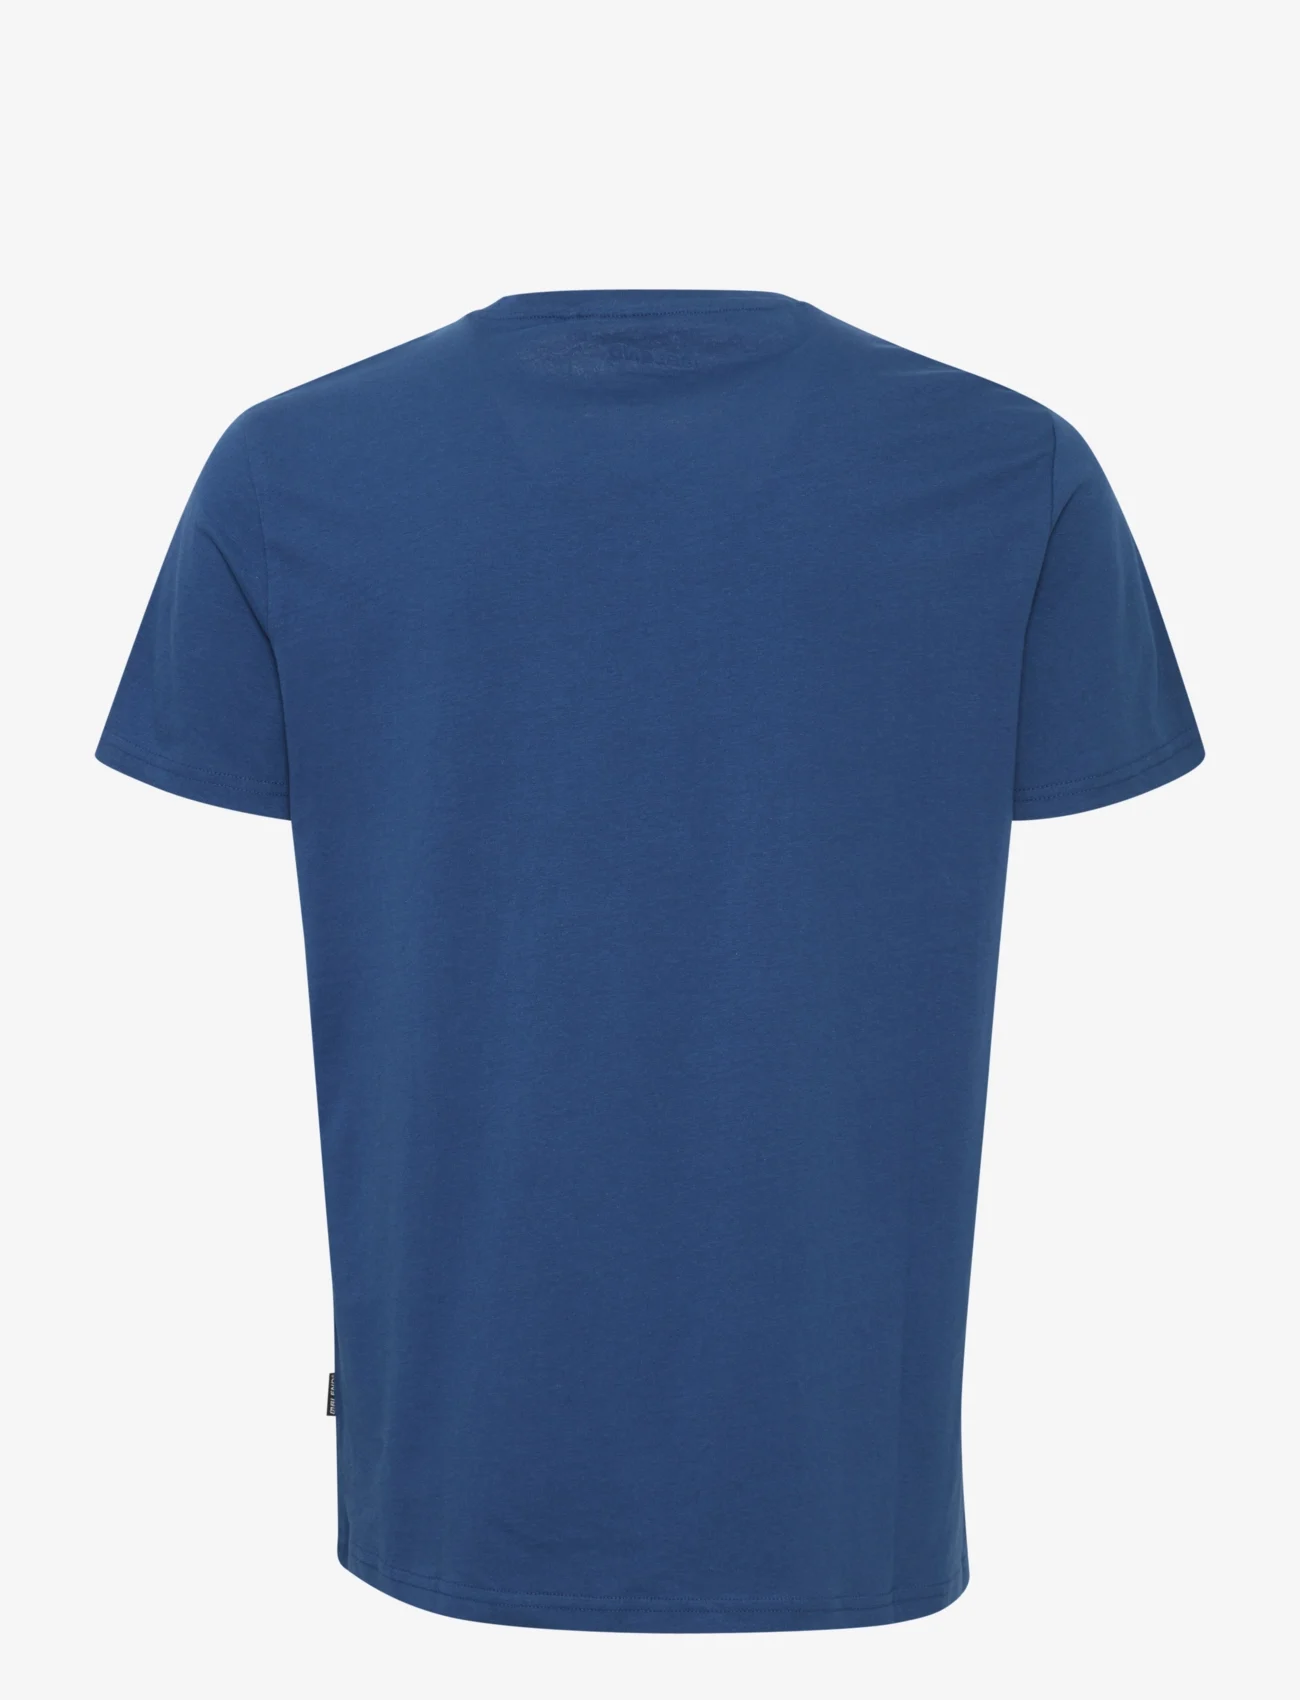 Blend - Tee - kortærmede t-shirts - navy peony - 1